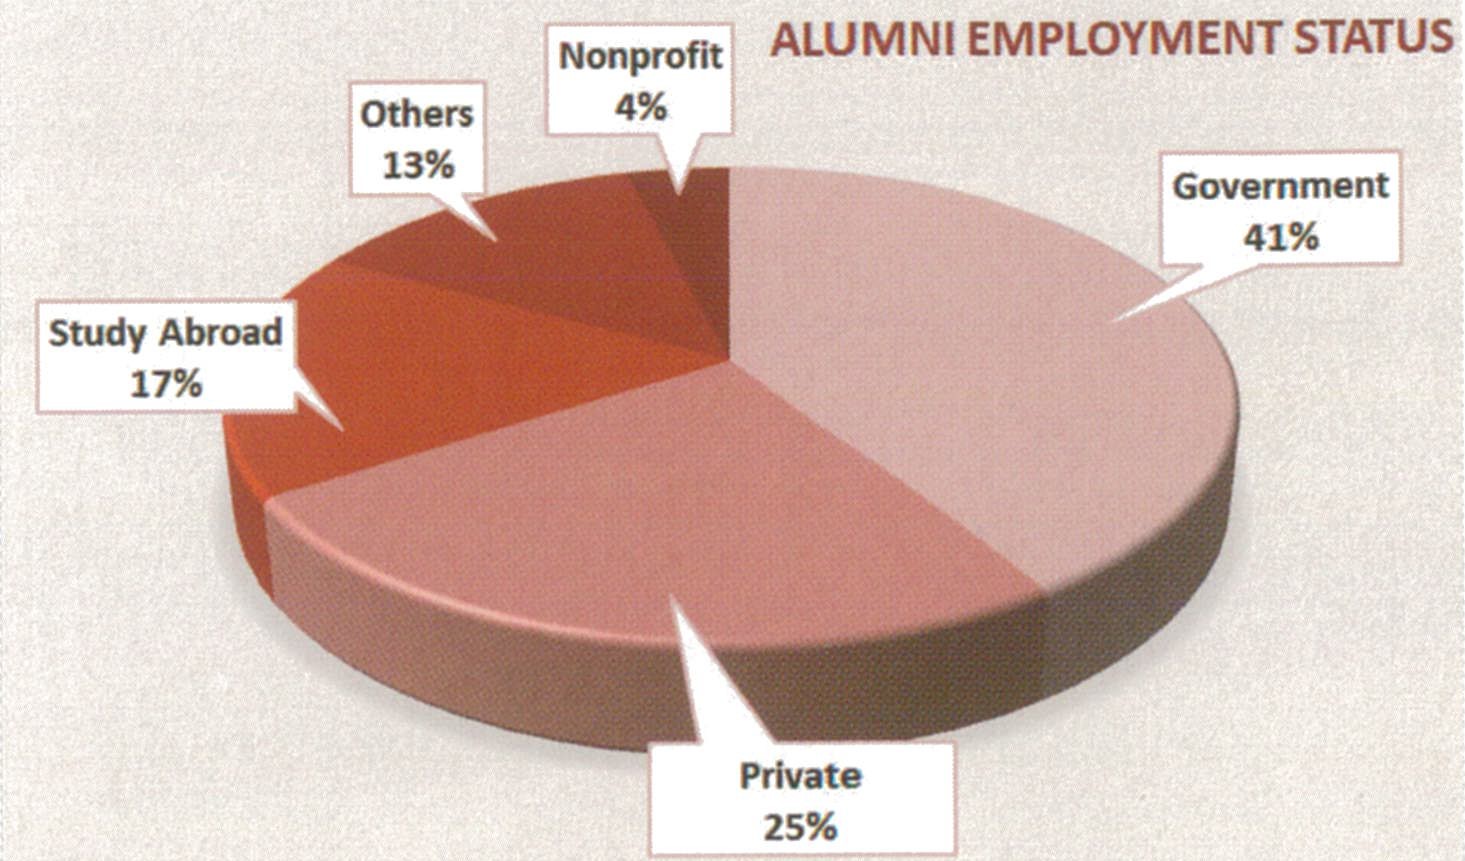 Alumni Employment Status